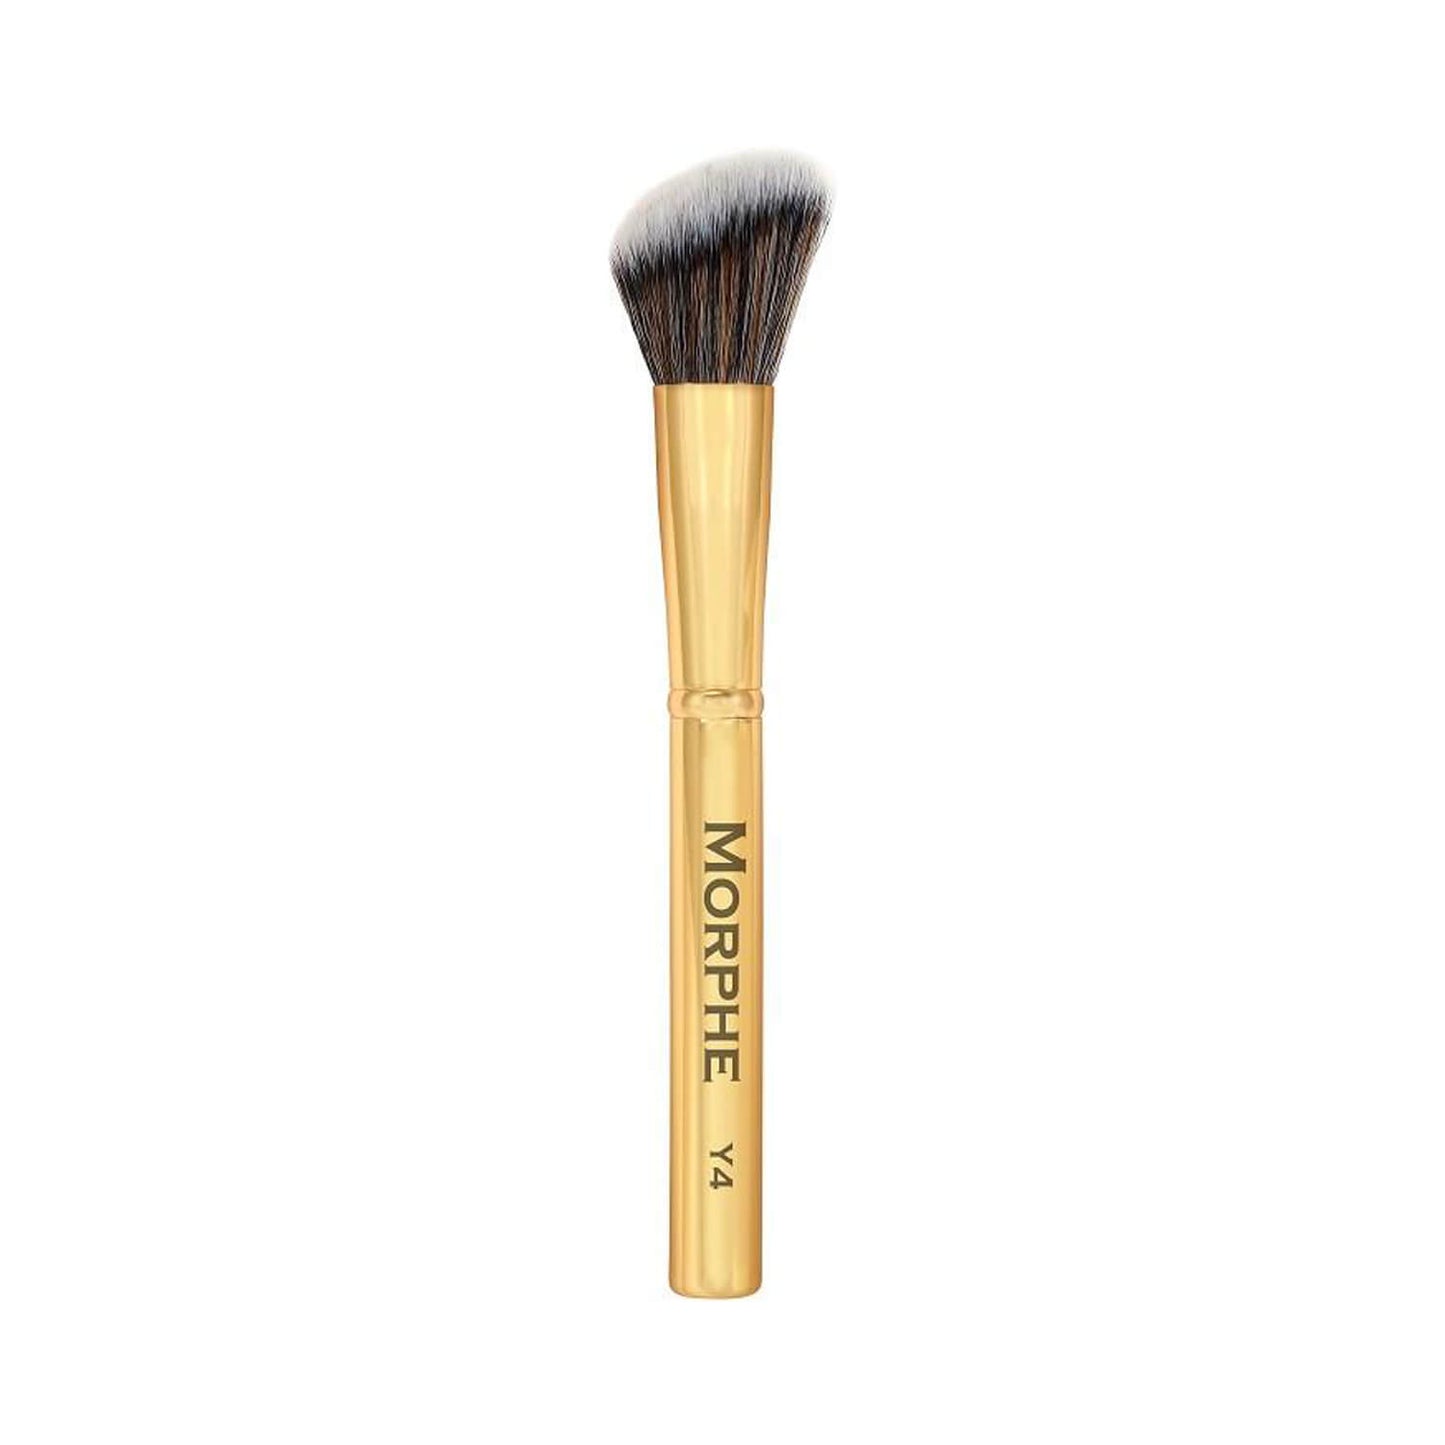 Morphe Cosmetics Y4 Deluxe Angle Blush Brush